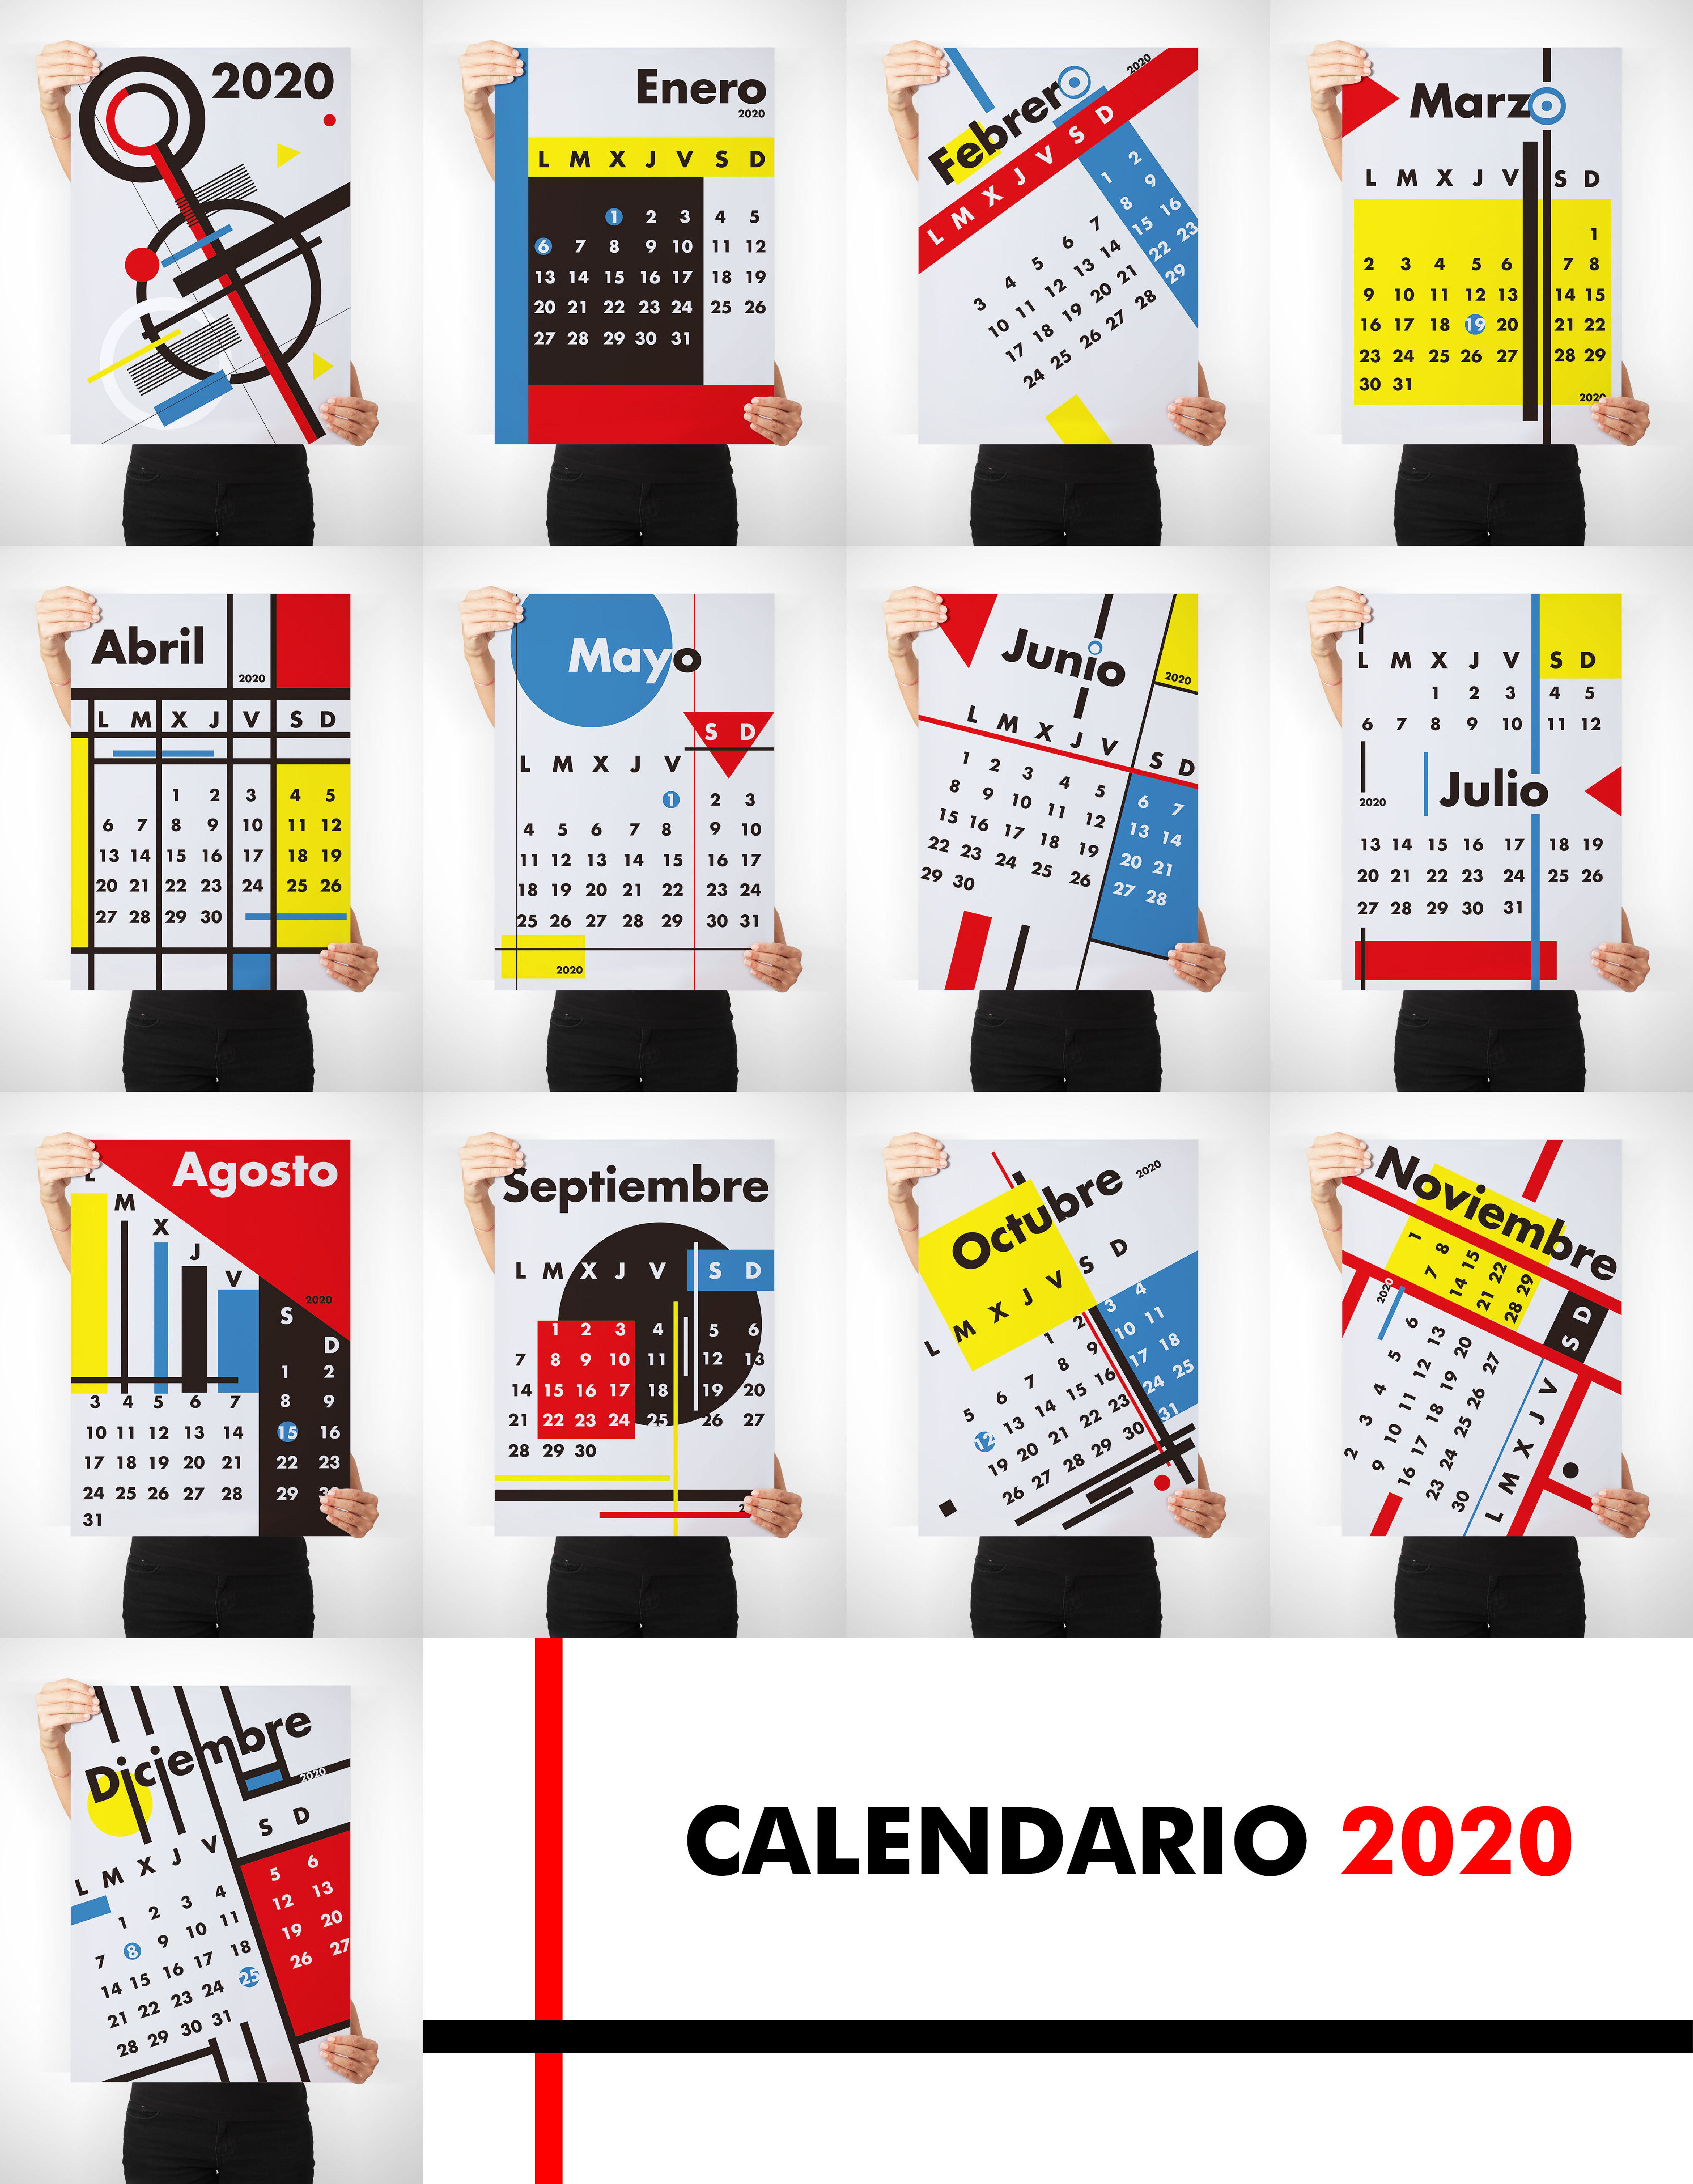 Calendario 2020 by Raquel Castañeda Gelabert - Creative Work - $i